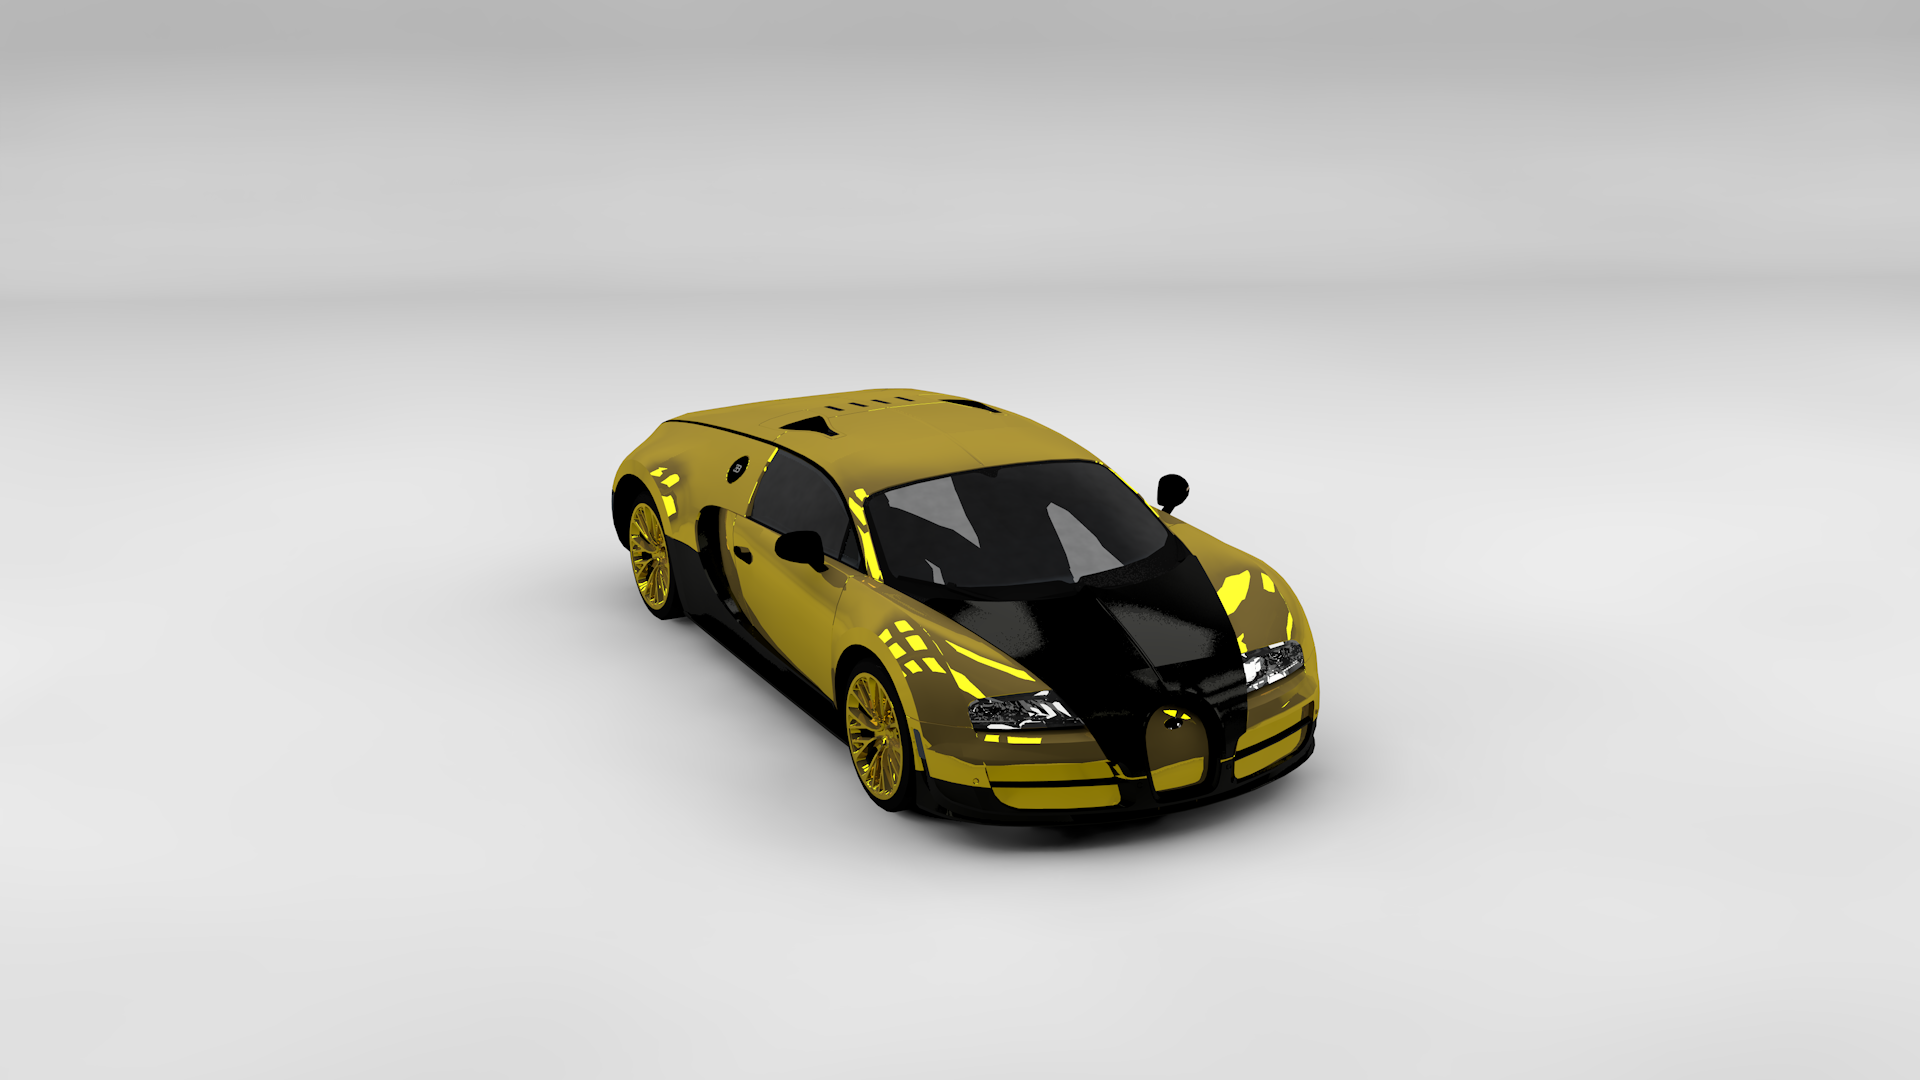 General 1920x1080 gold Bugatti Veyron Bugatti car digital art simple background yellow cars vehicle